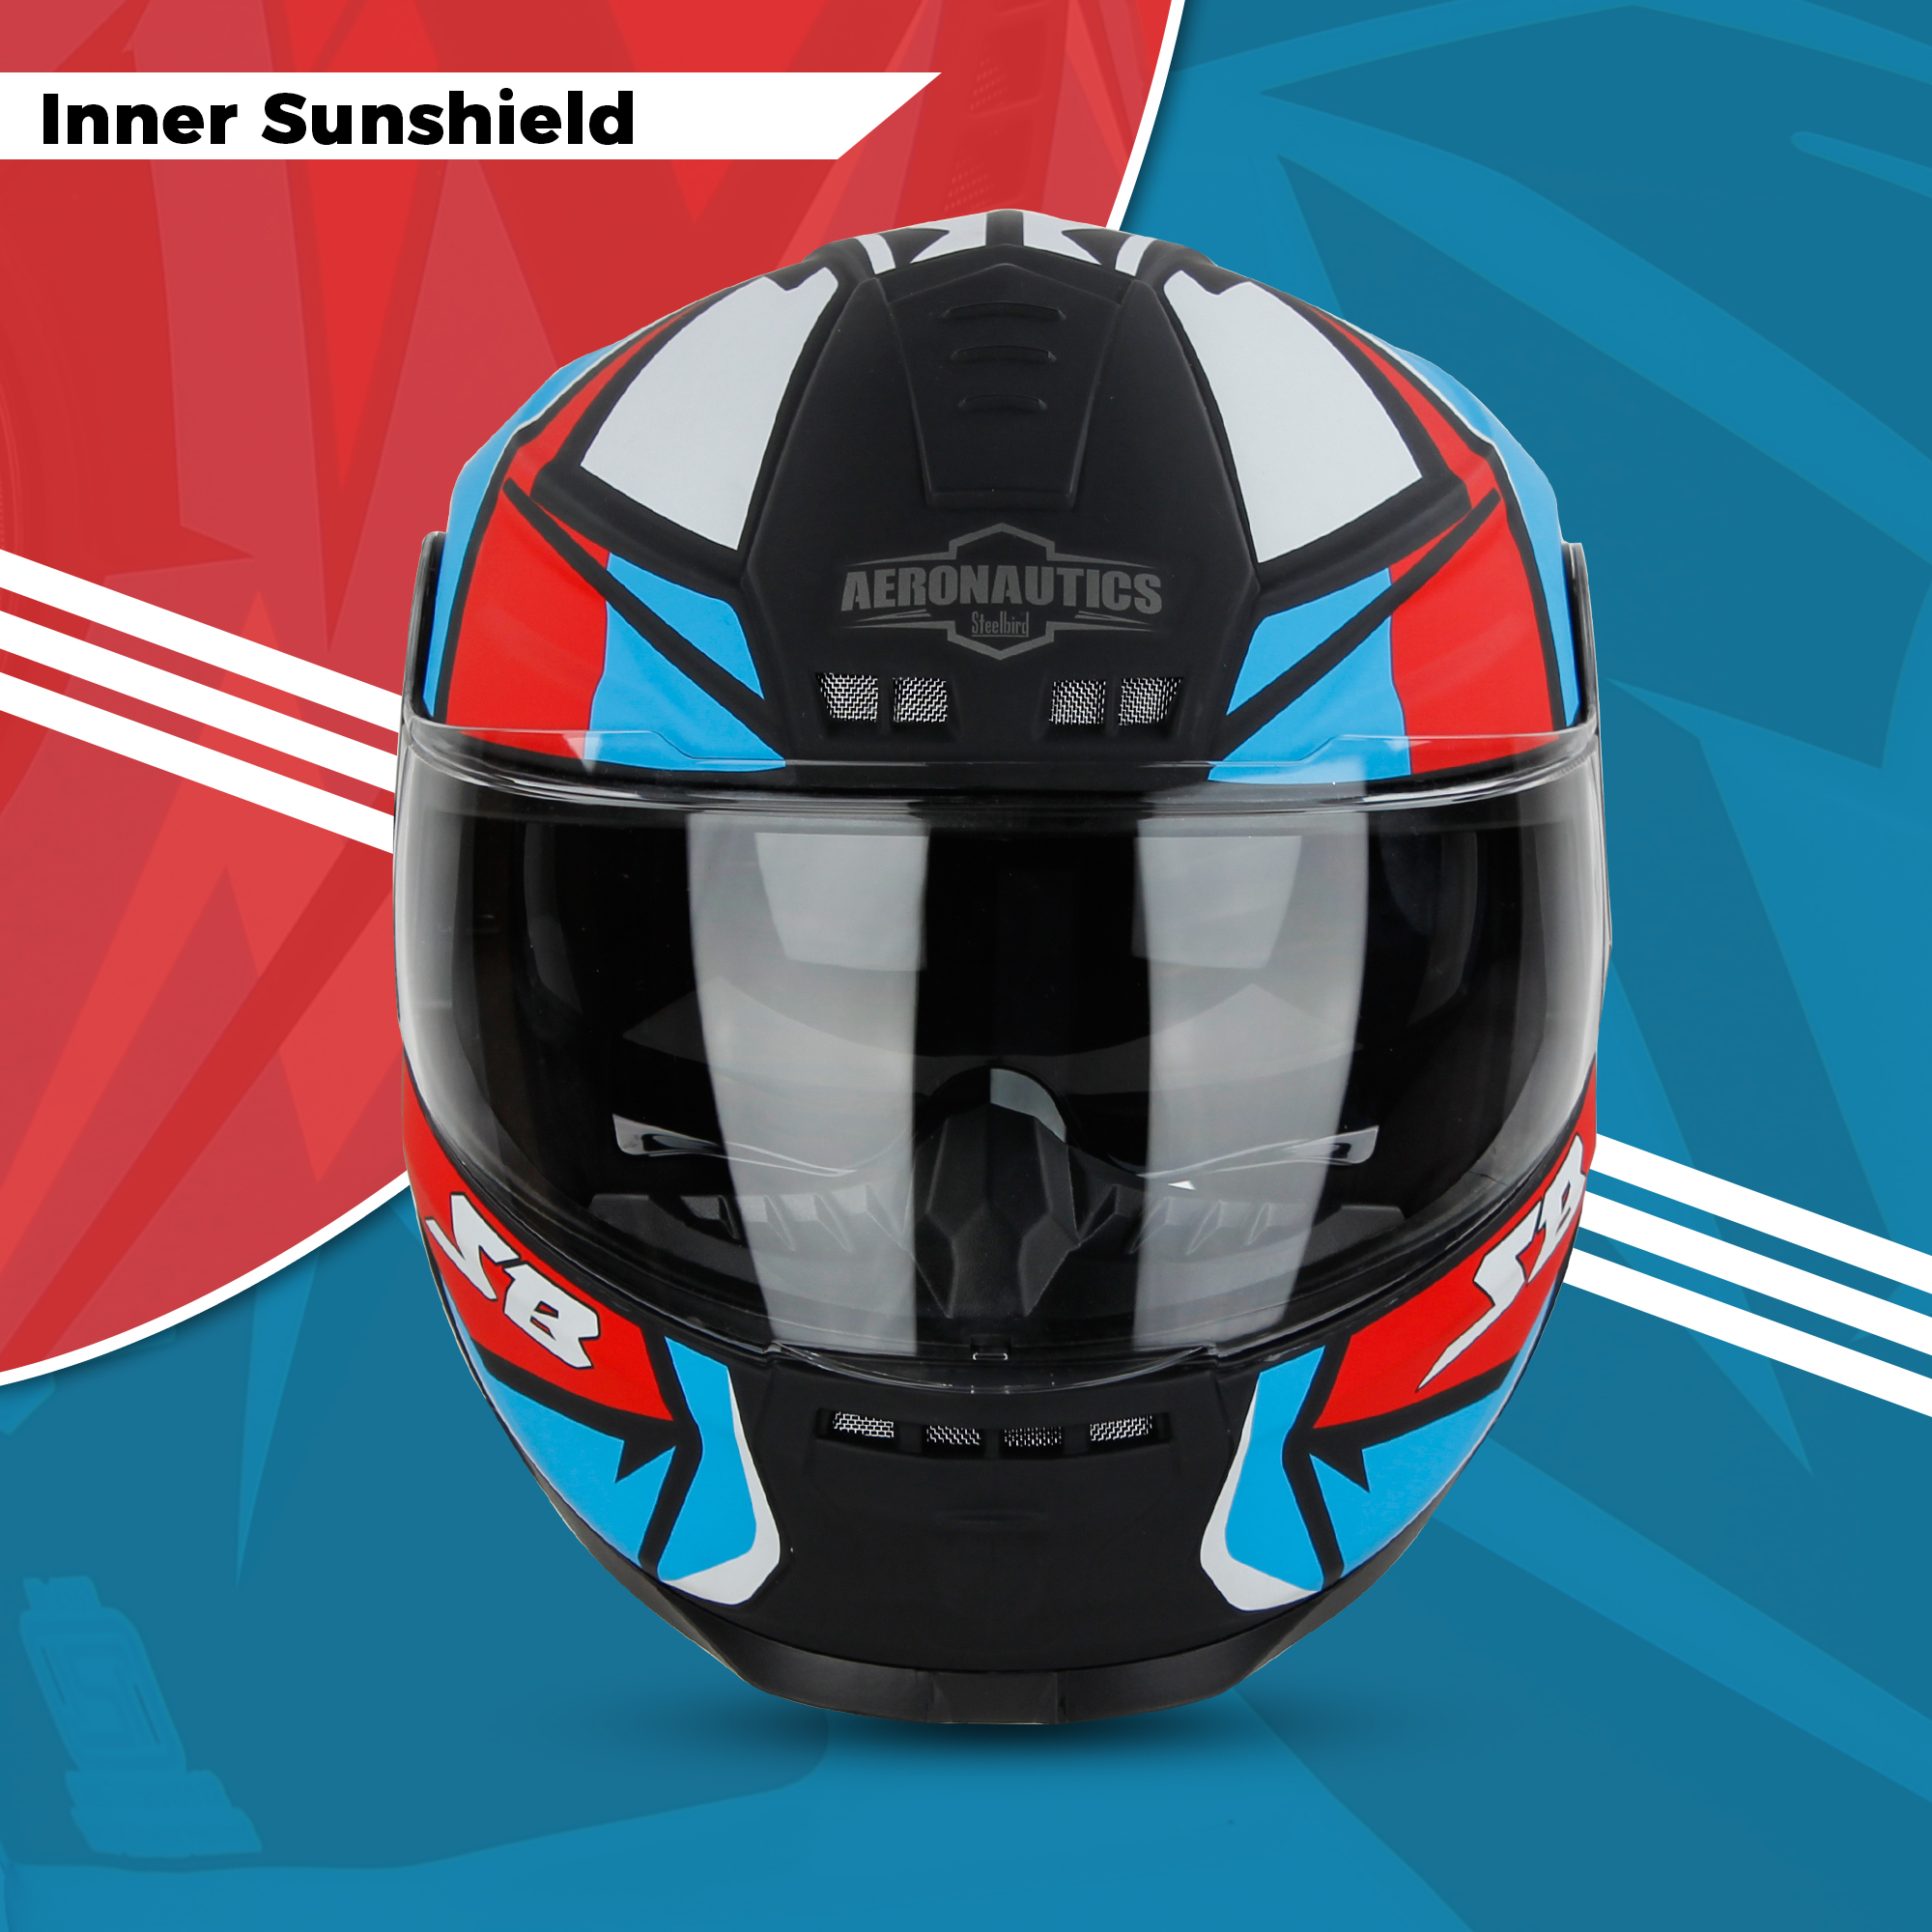 Steelbird SBH-40 Decode ISI Certified Full Face Graphic Helmet For Men And Women With Inner Sun Shield (Matt Black Red)